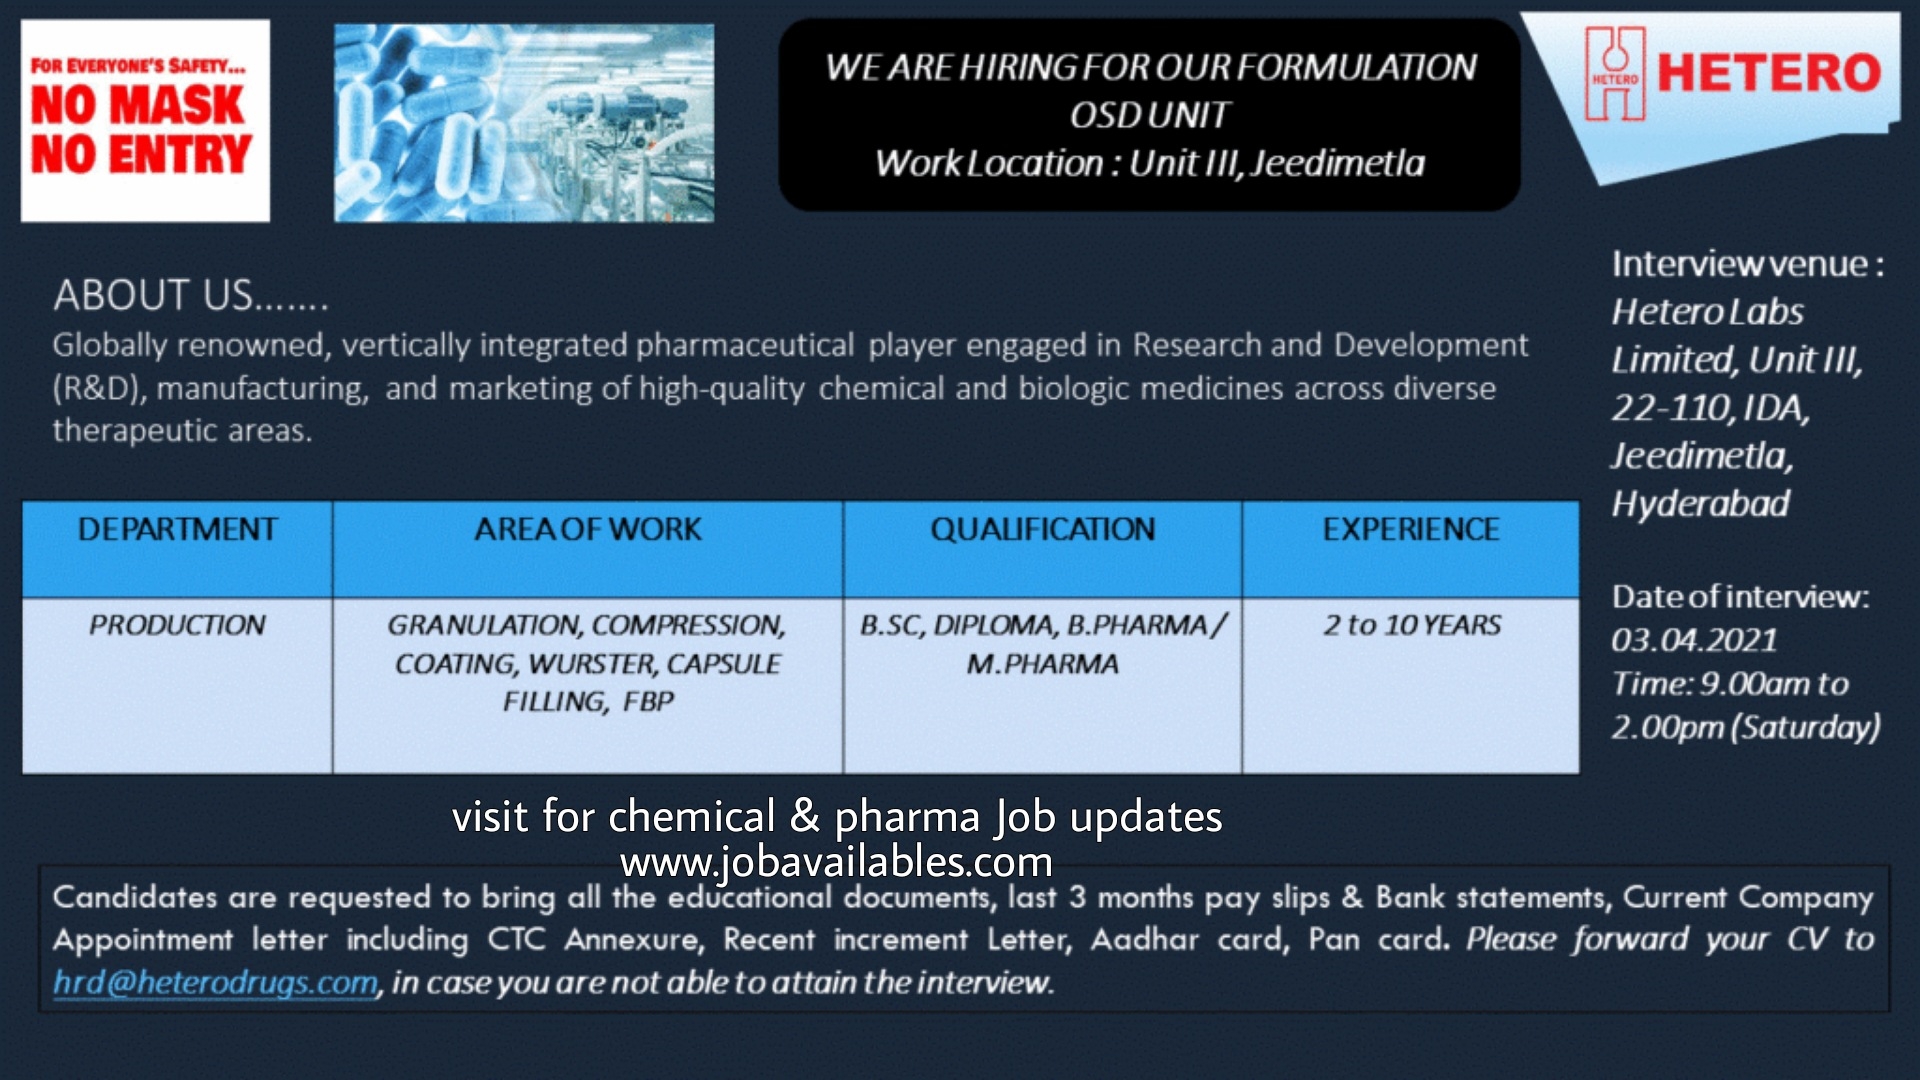 Job Availables, Hetero Job Opening For Bsc/ M.Pharma/ B.Pharma/ Diploma - Production Dept